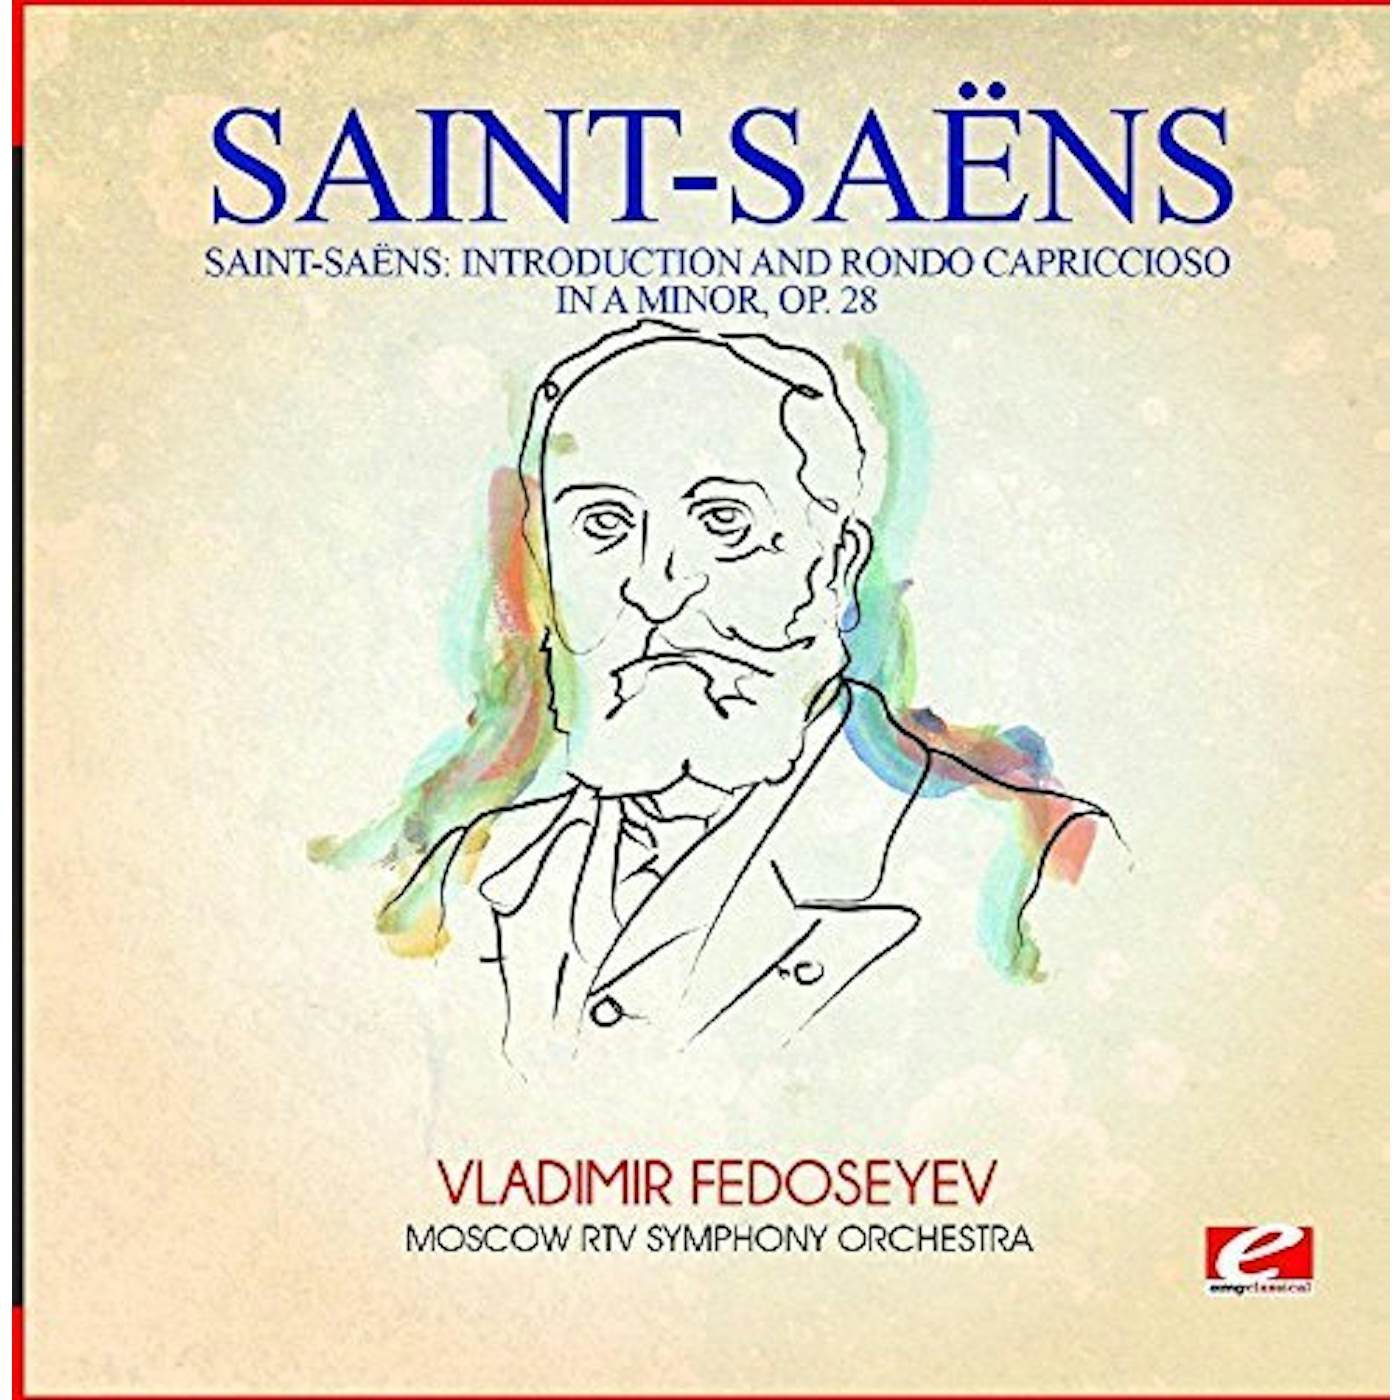 Saint-Saens INTRODUCTION & RONDO CAPRICCIOSO IN A MINOR OP. 28 CD